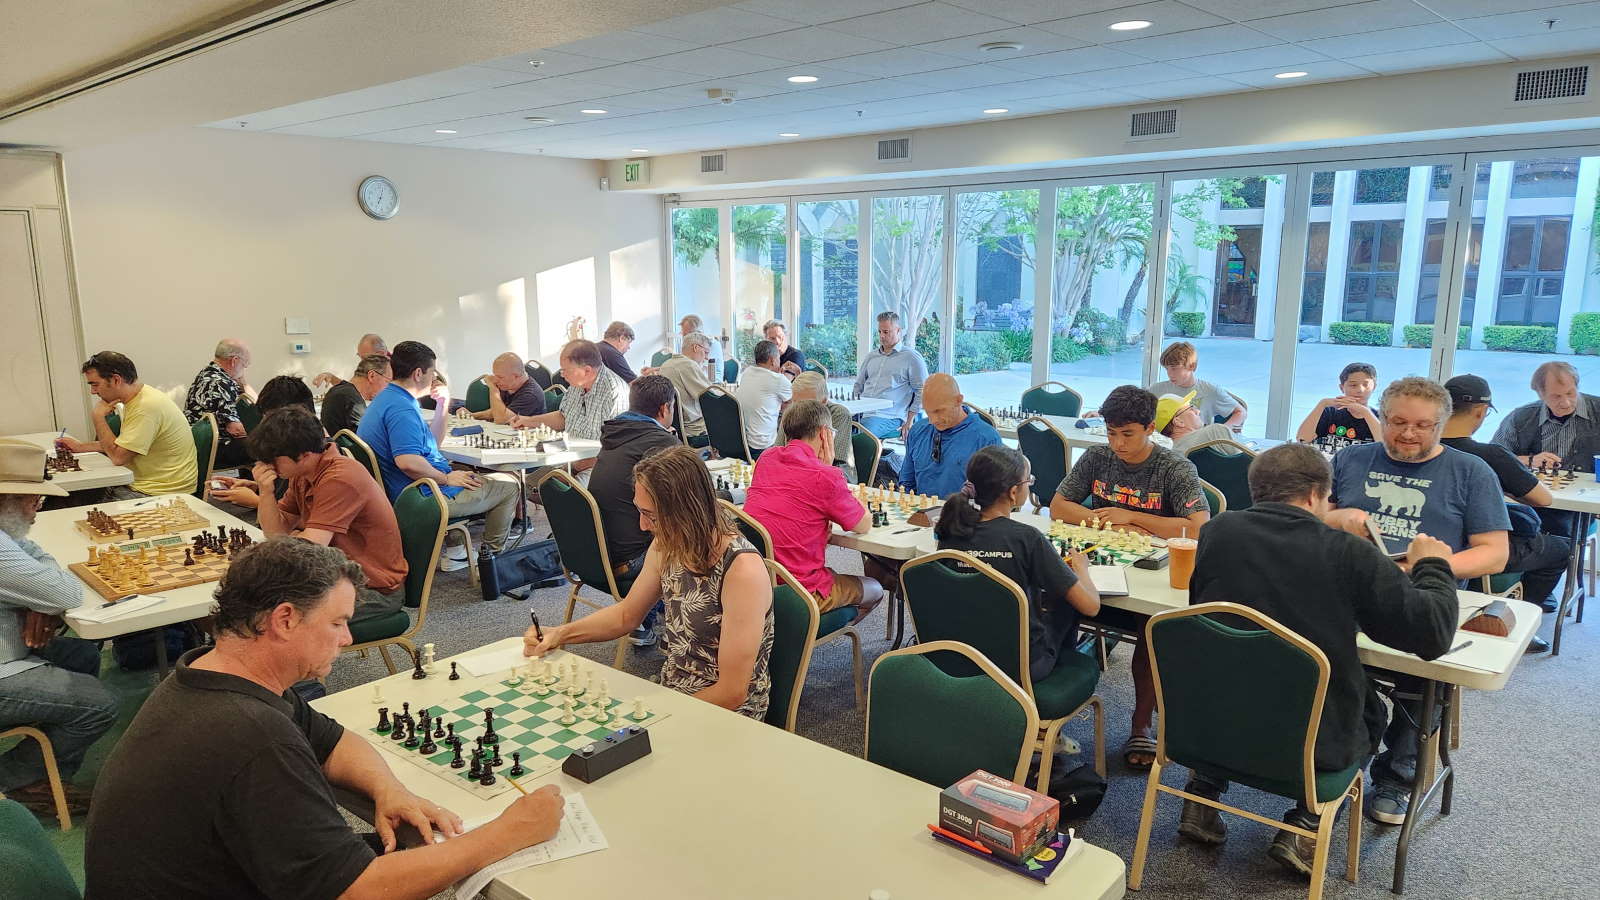 North County Chess Club of San Diego